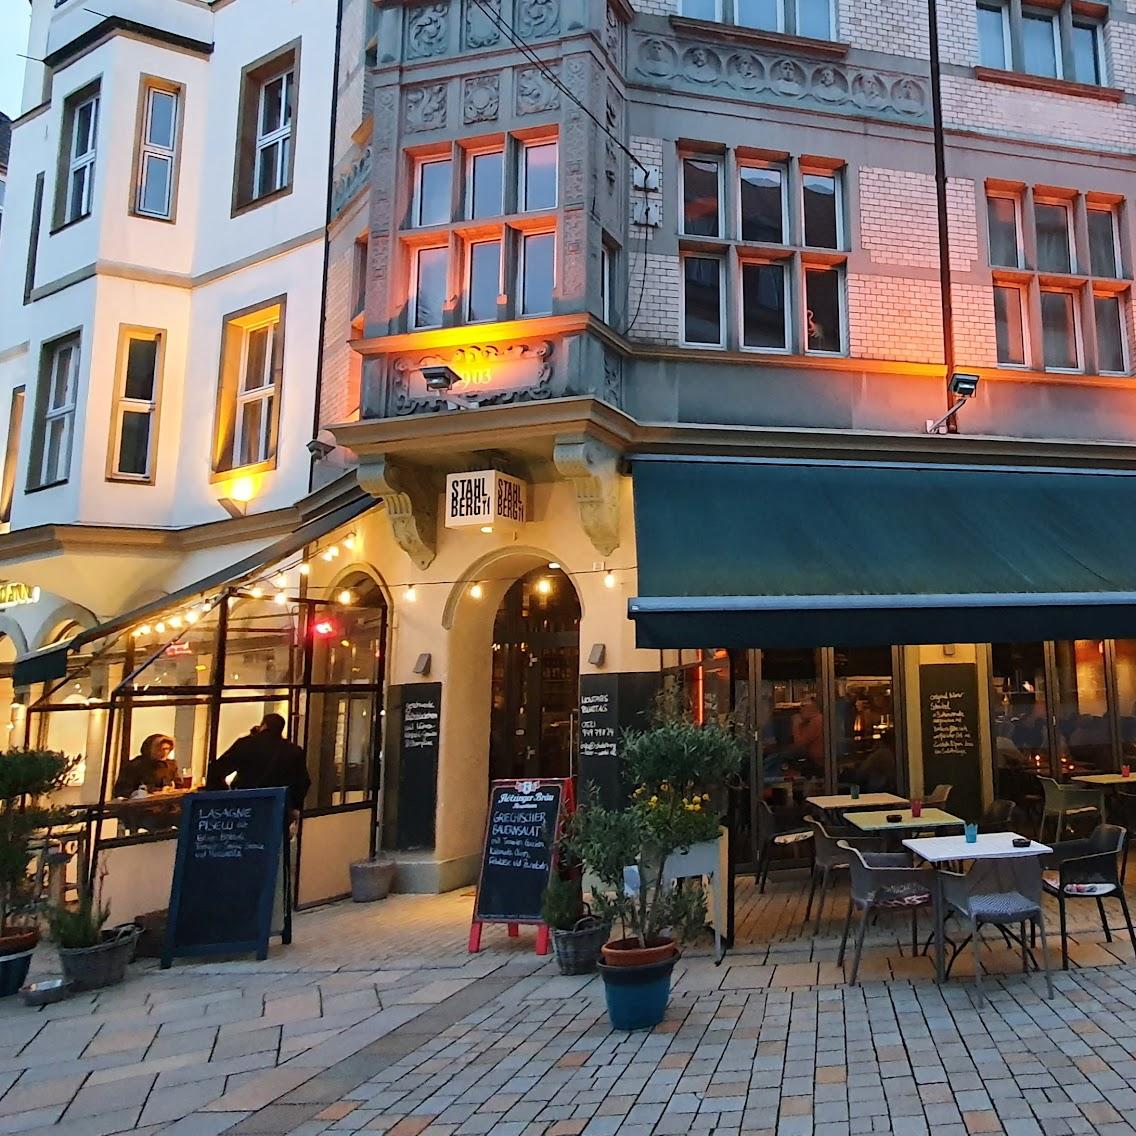 Restaurant "Stahlberg" in Bielefeld